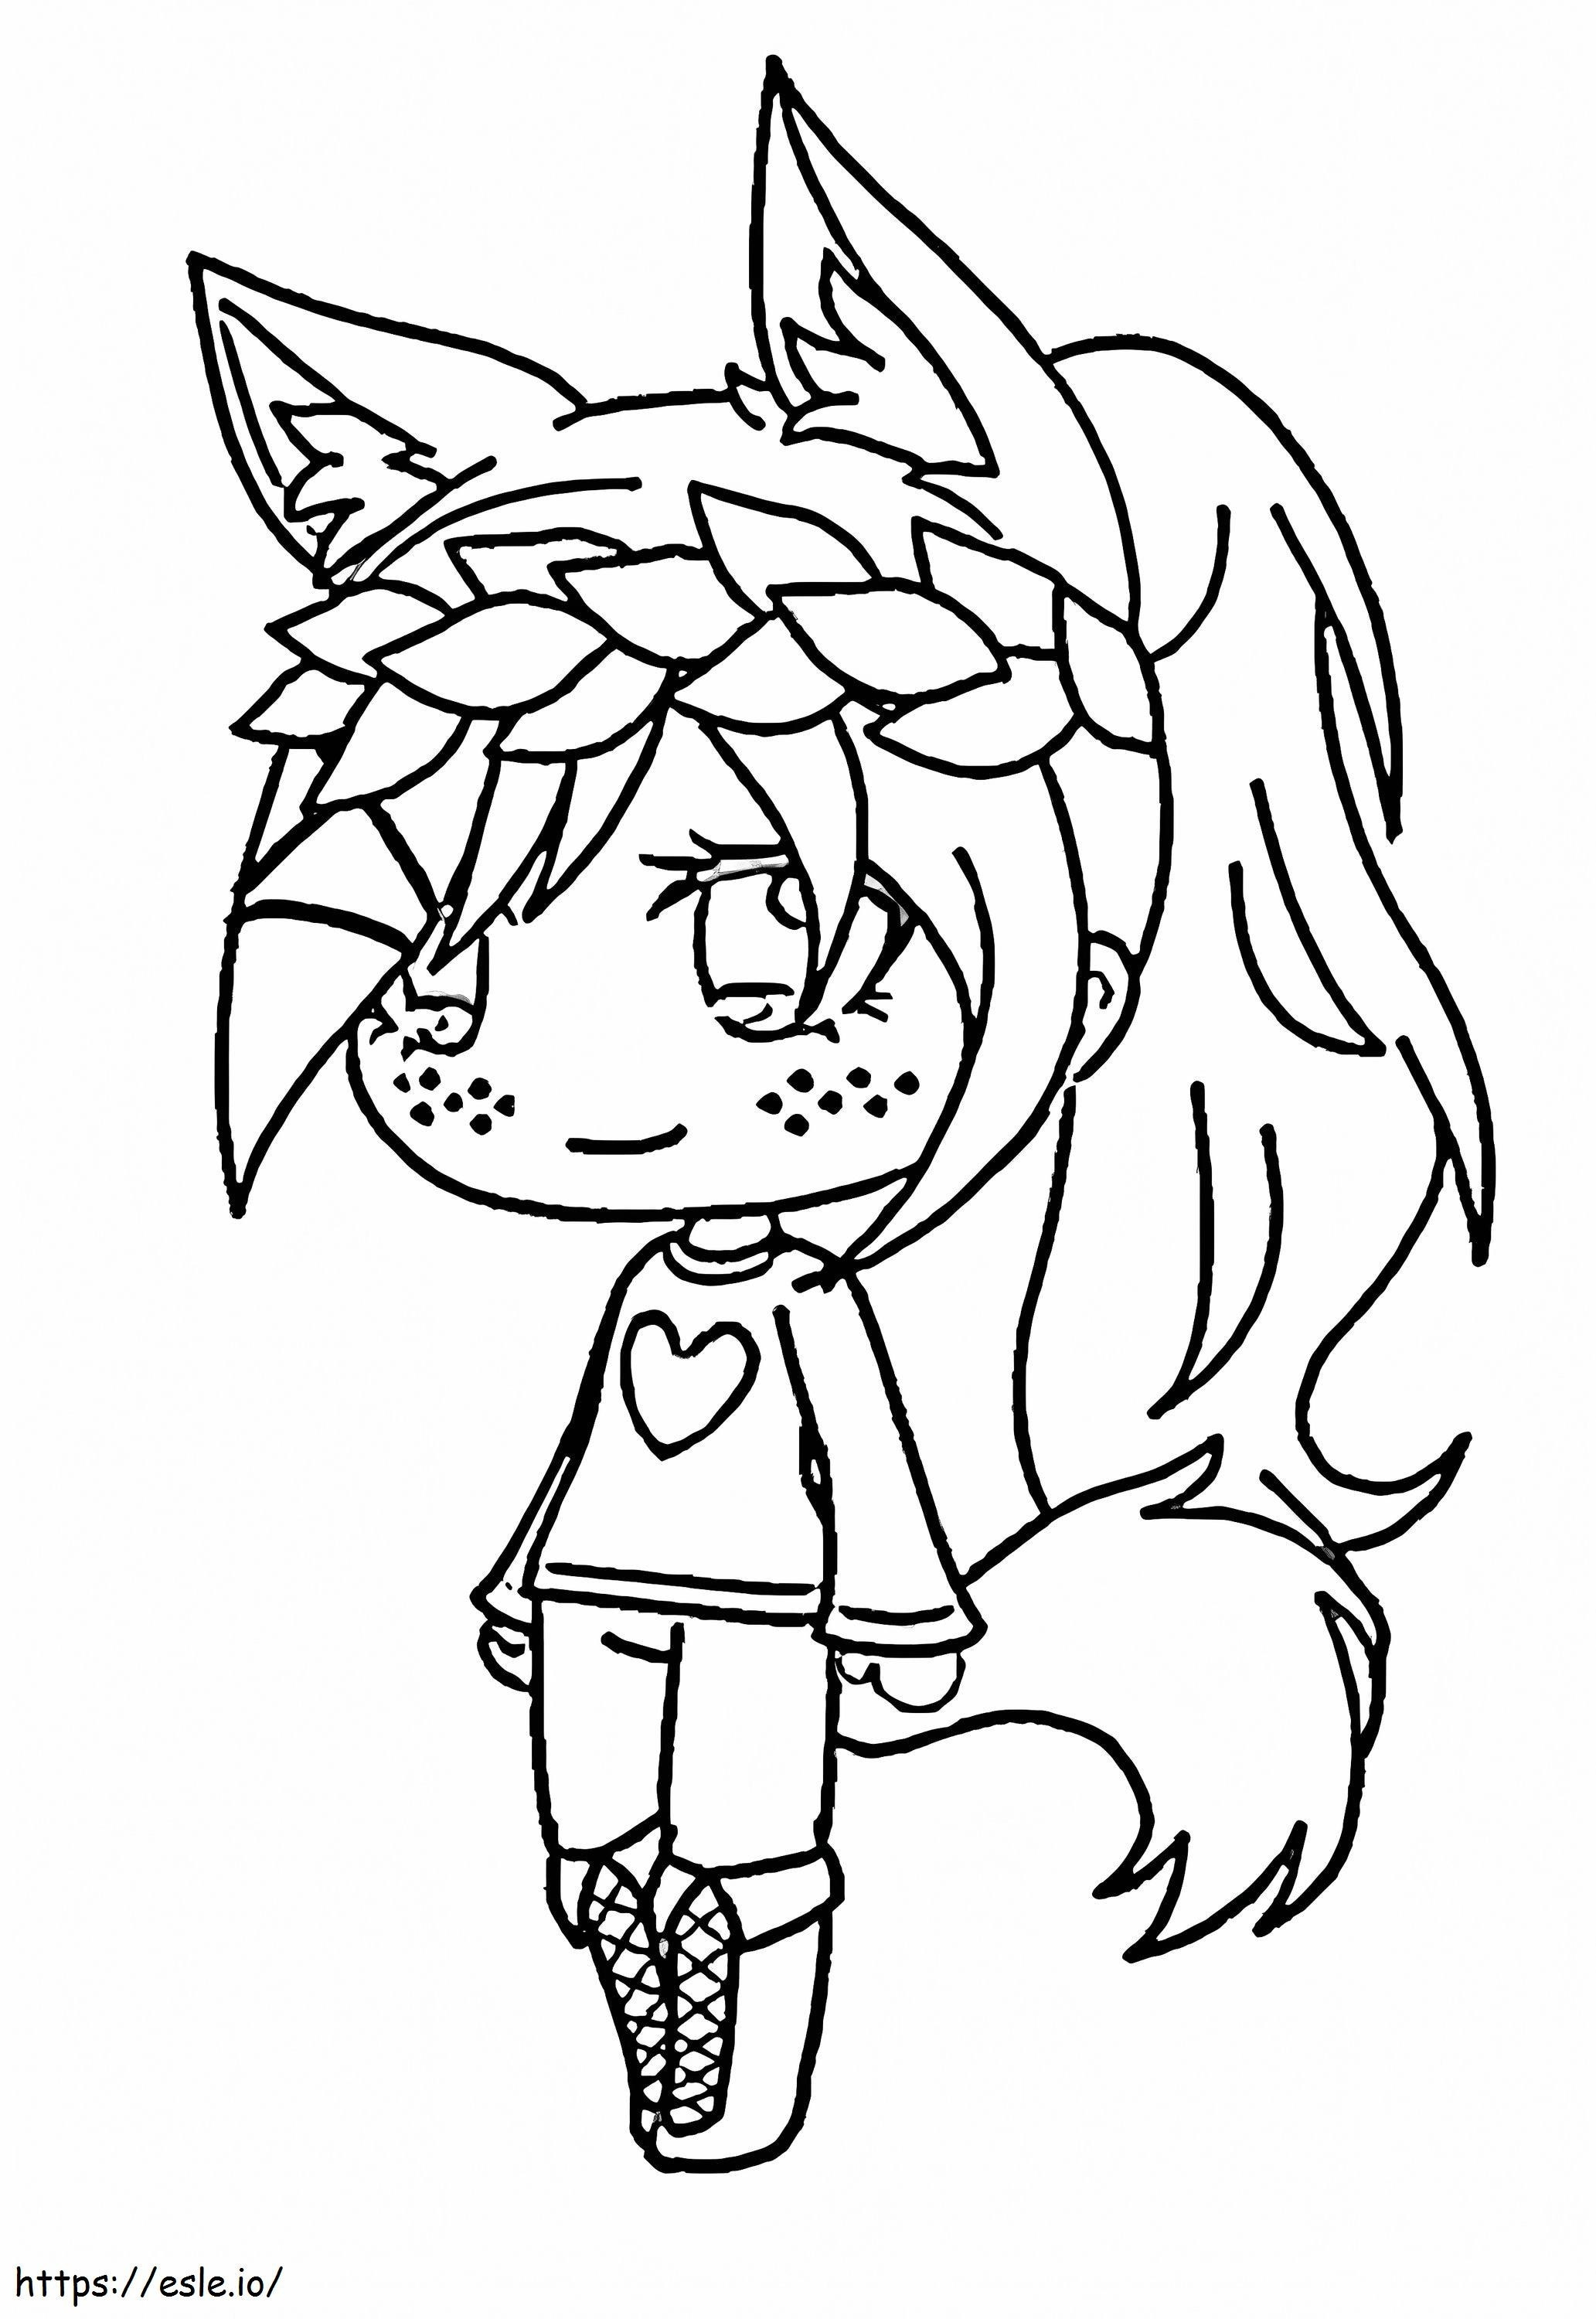 chibi wolf girl drawing